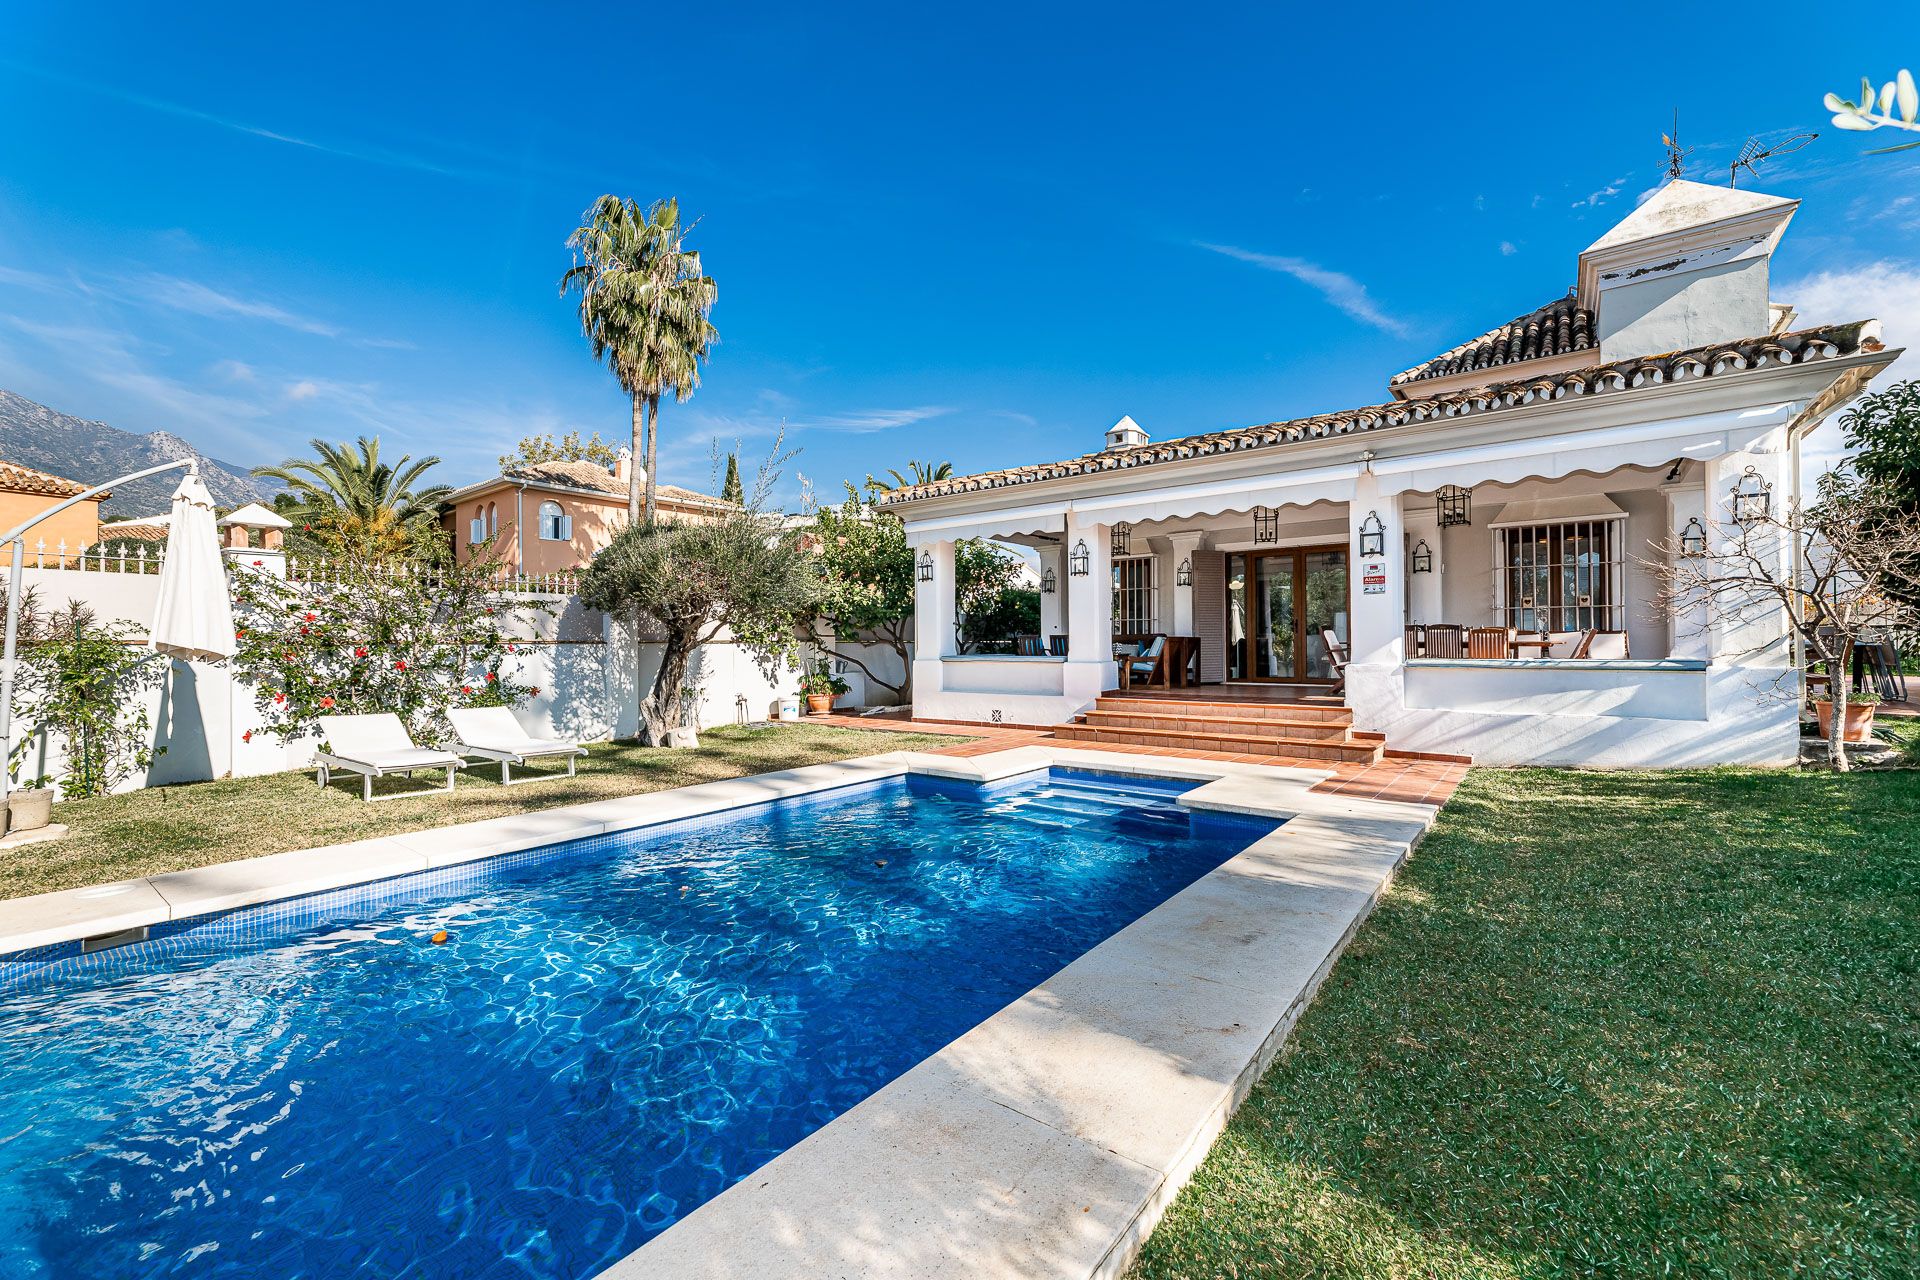 Villa On The Golden Mile Beachside In Casablanca Engel Volkers Marbella